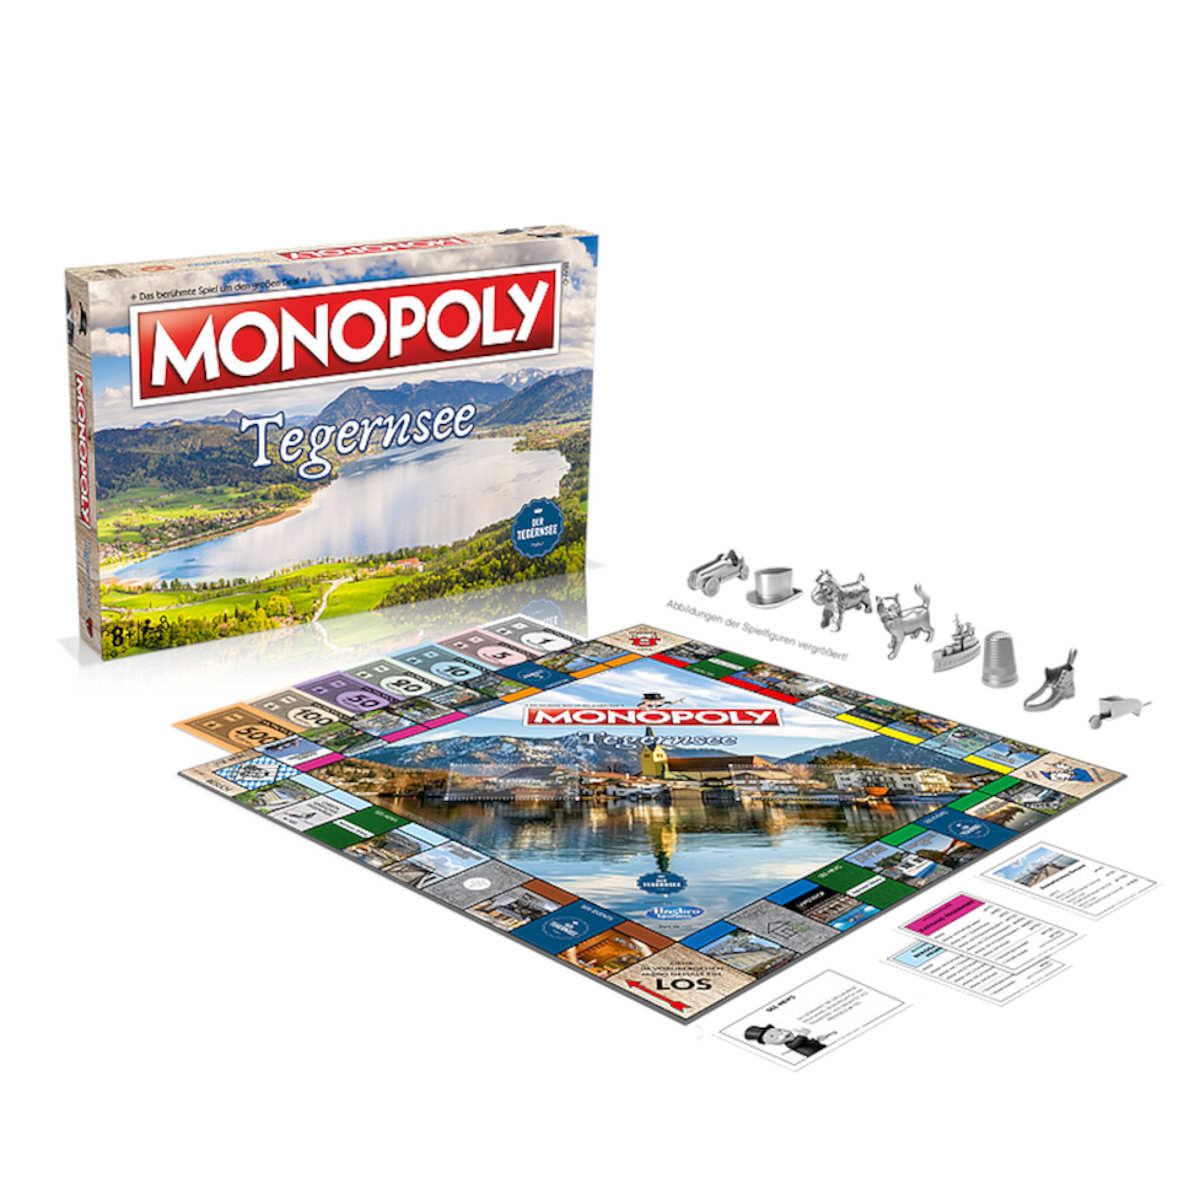 Monopoly Tegernsee